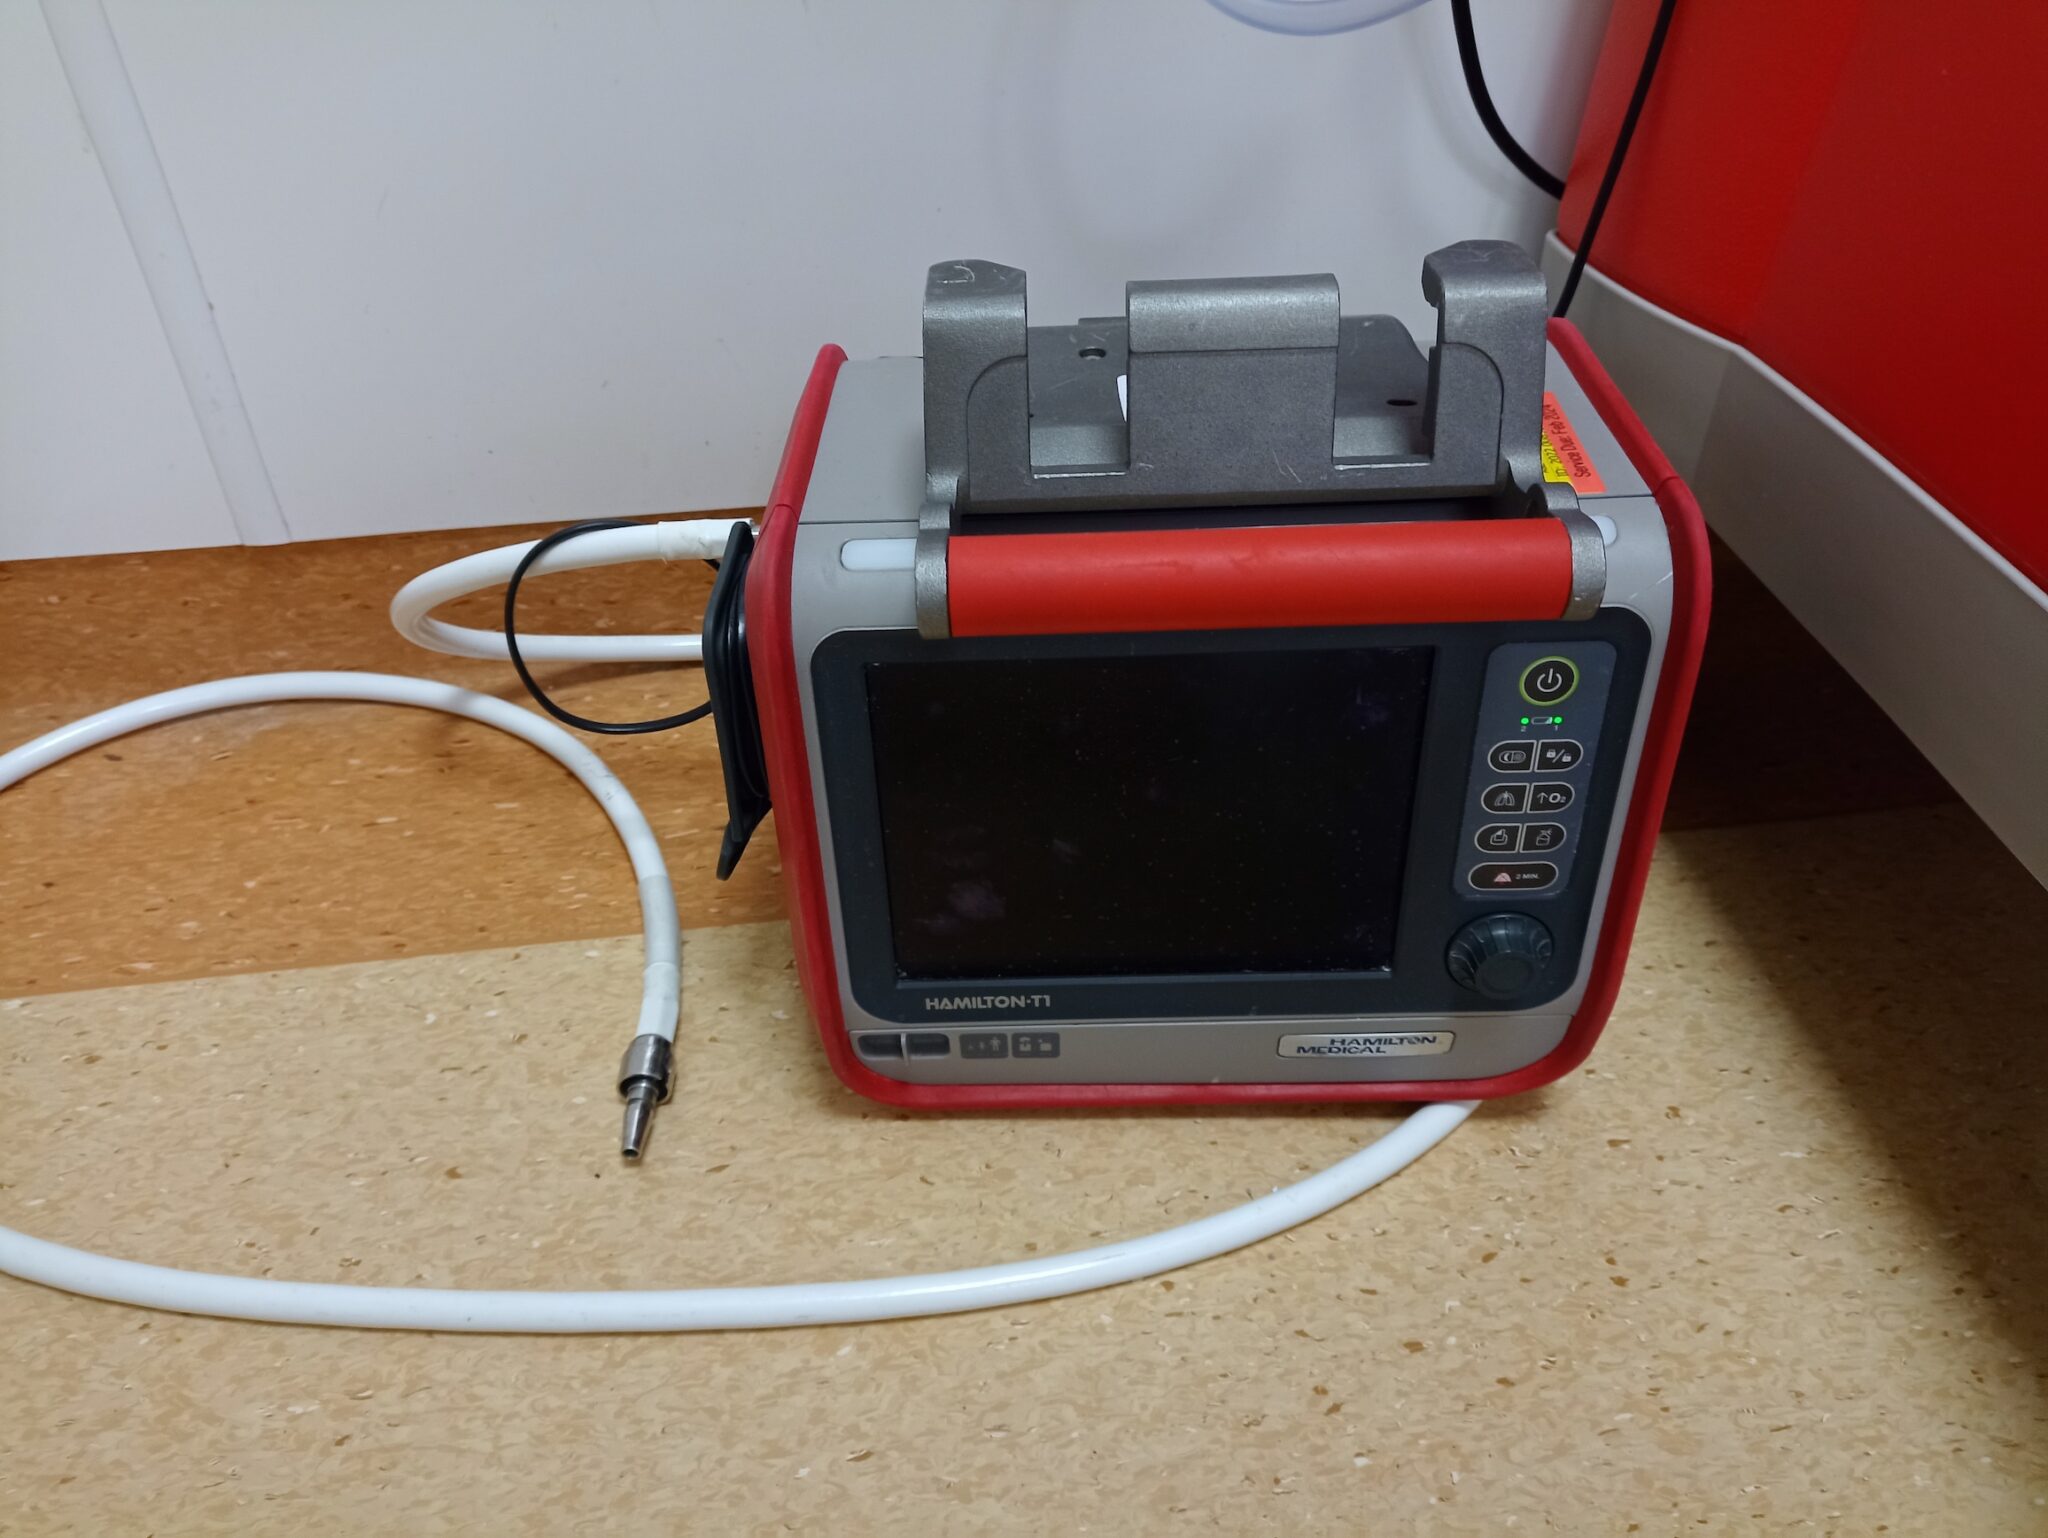 Portable ventilator for patient transfer